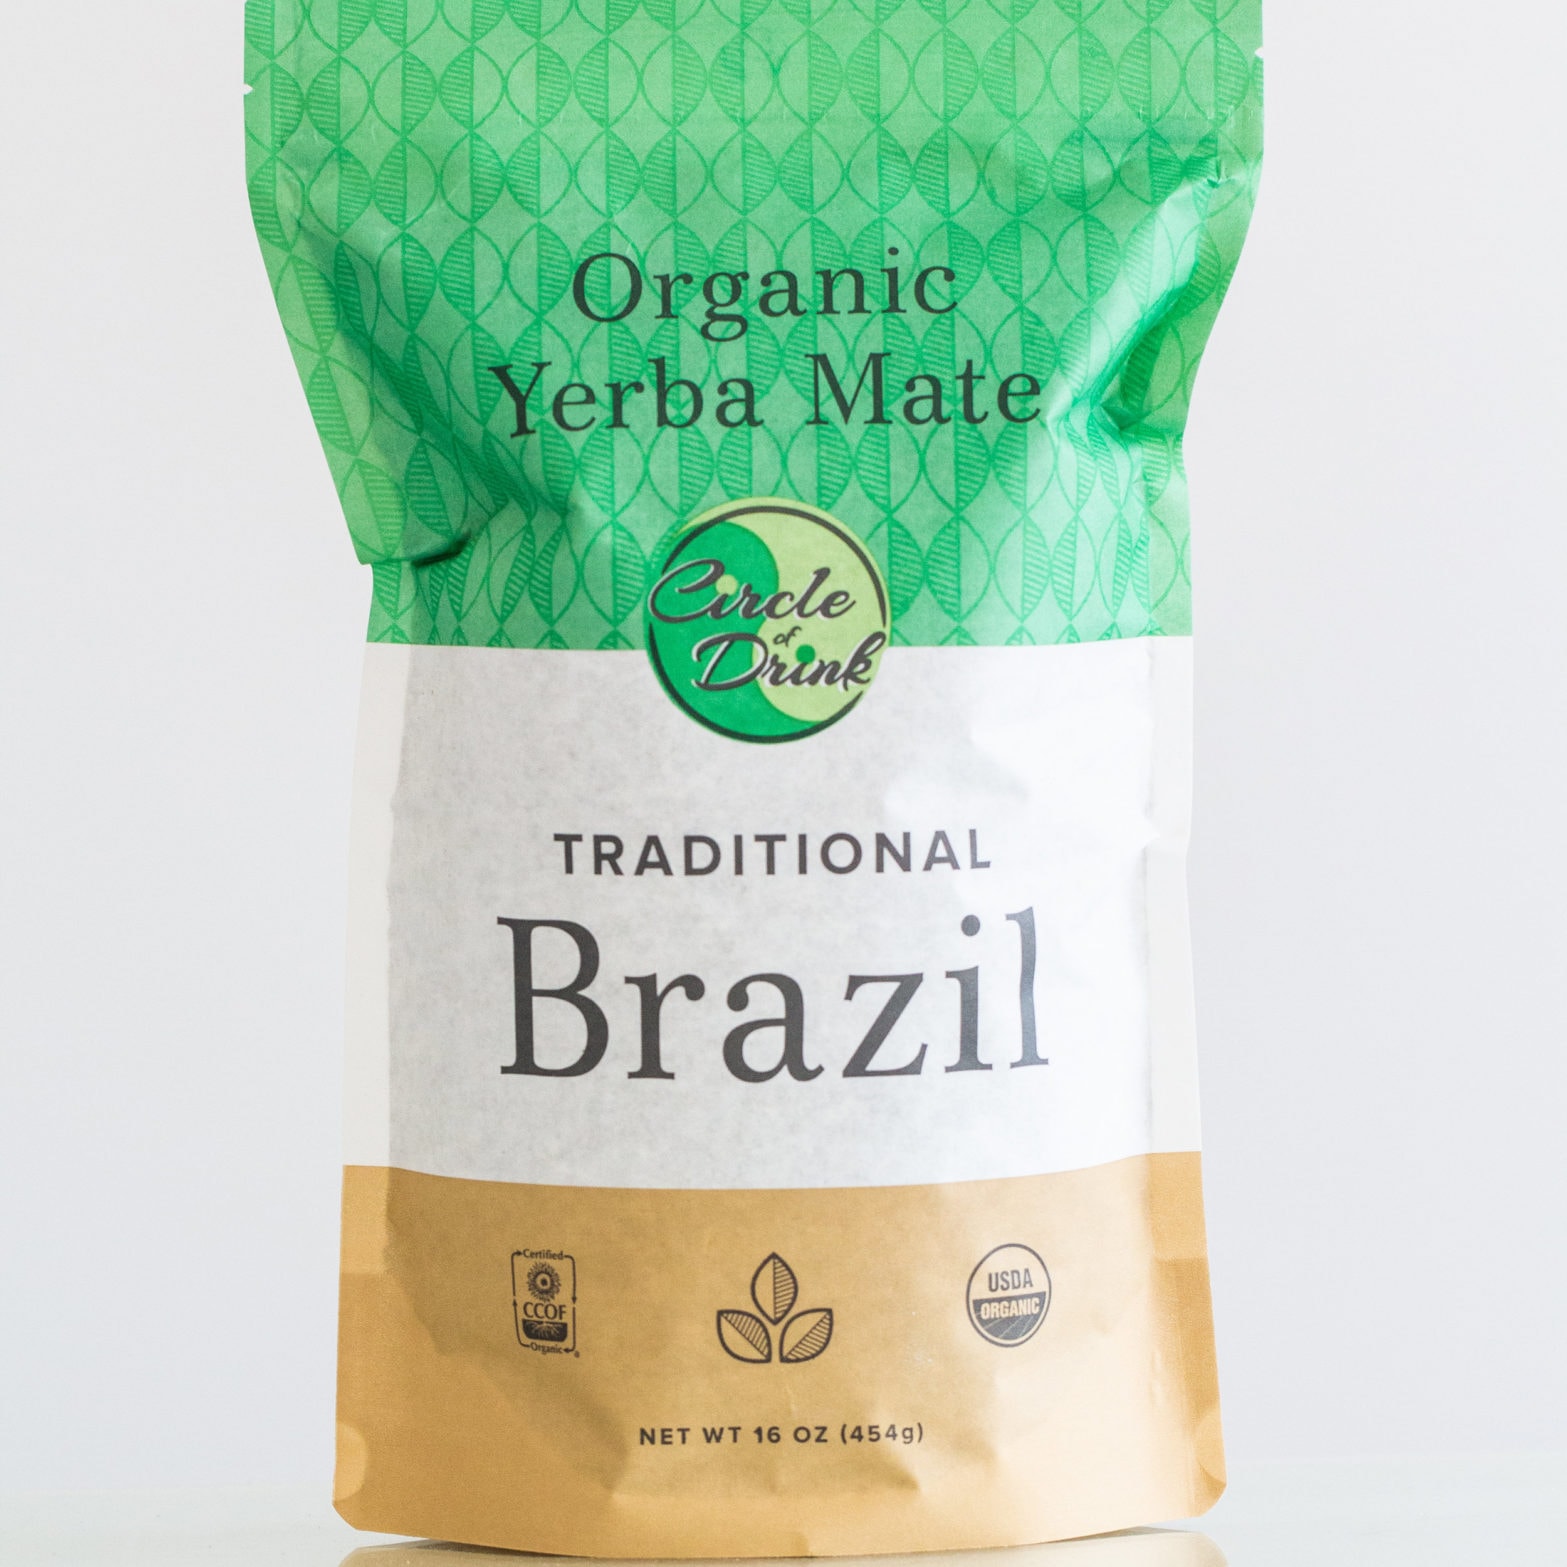 Brazil Traditional Organic Yerba Mate - Air Dried - Certified Organic